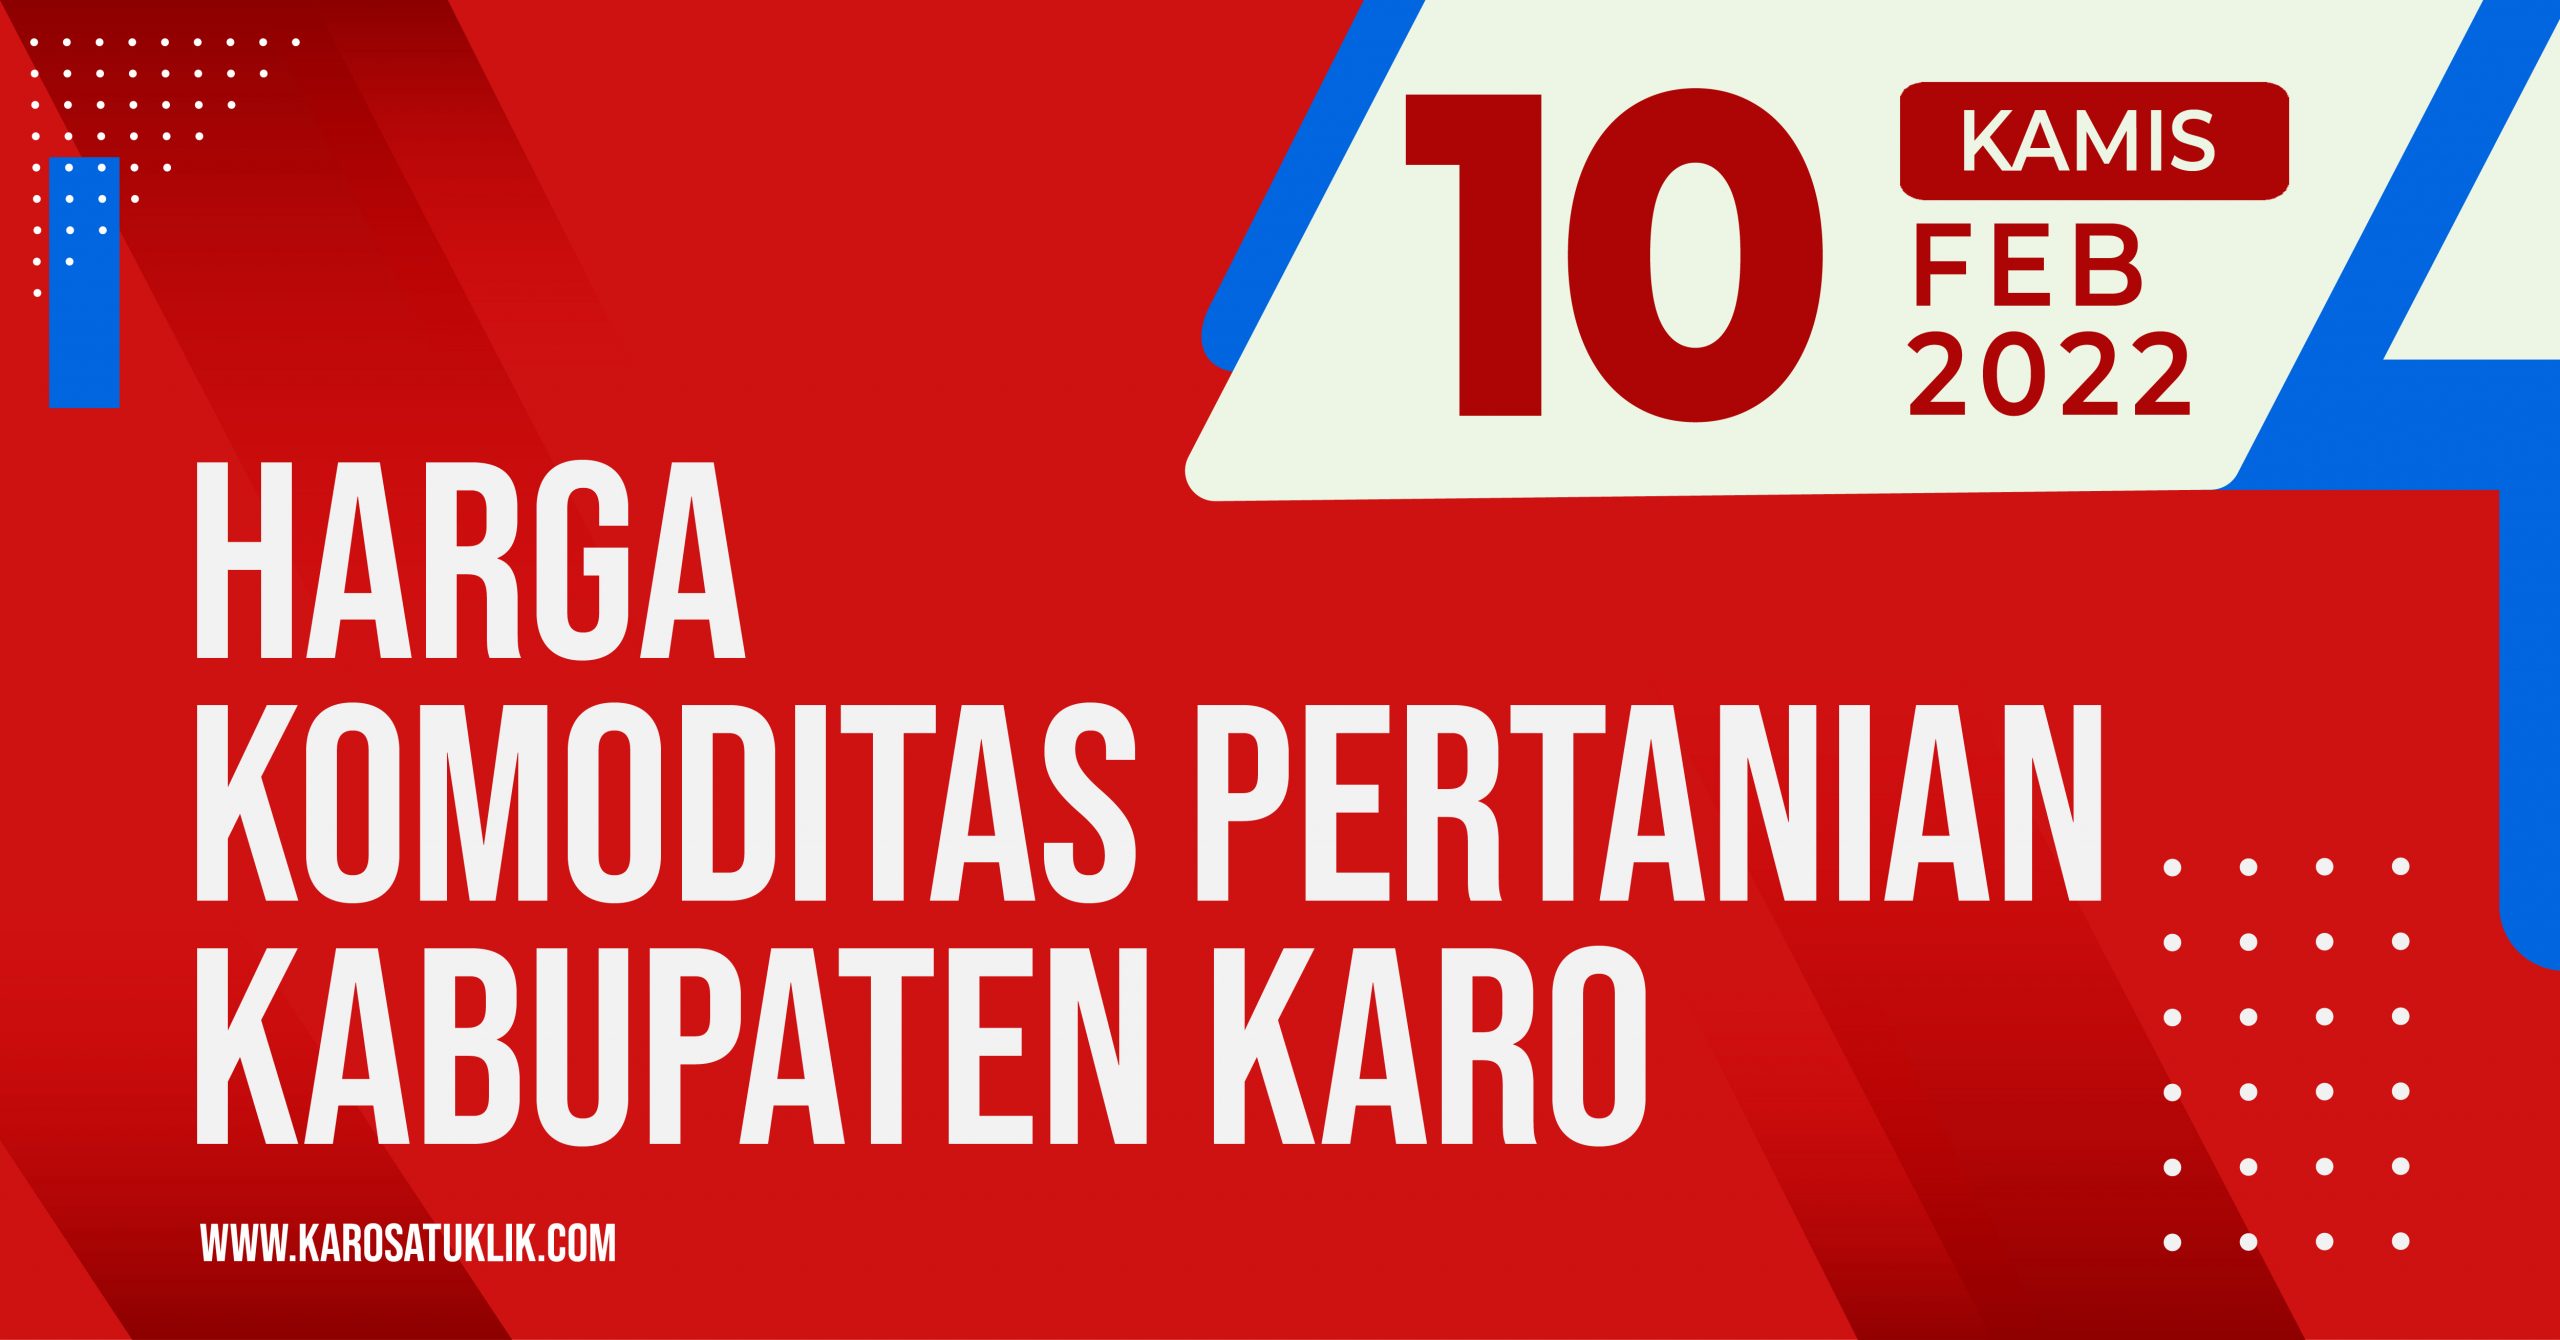 Daftar Harga Komoditas Pertanian Kabupaten Karo, 10 Februari 2022